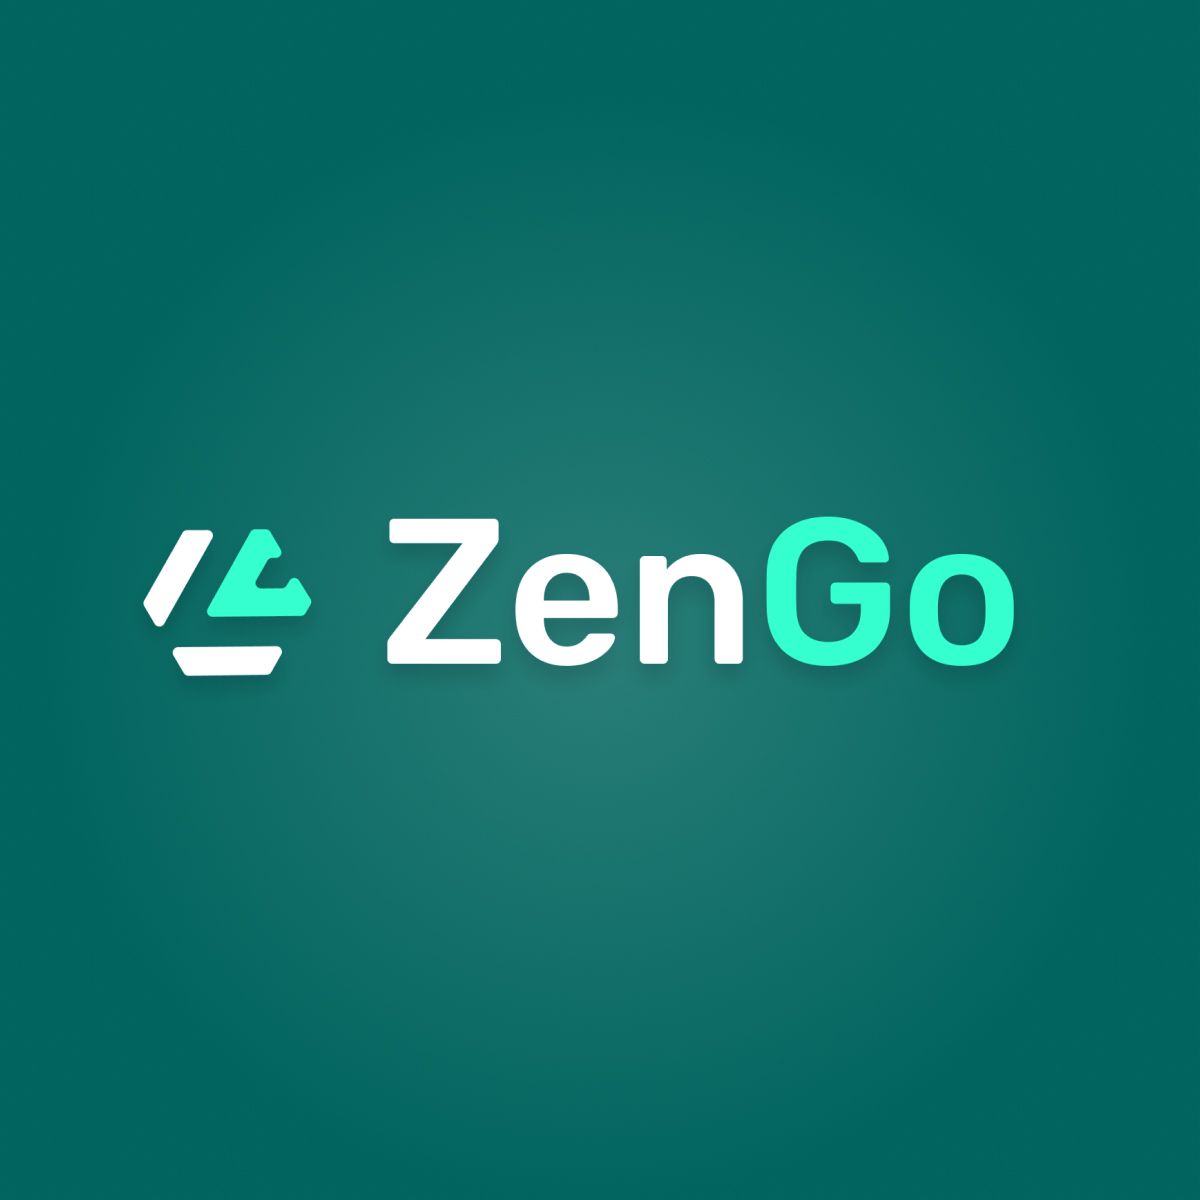 ZenGo Technologies Ltd